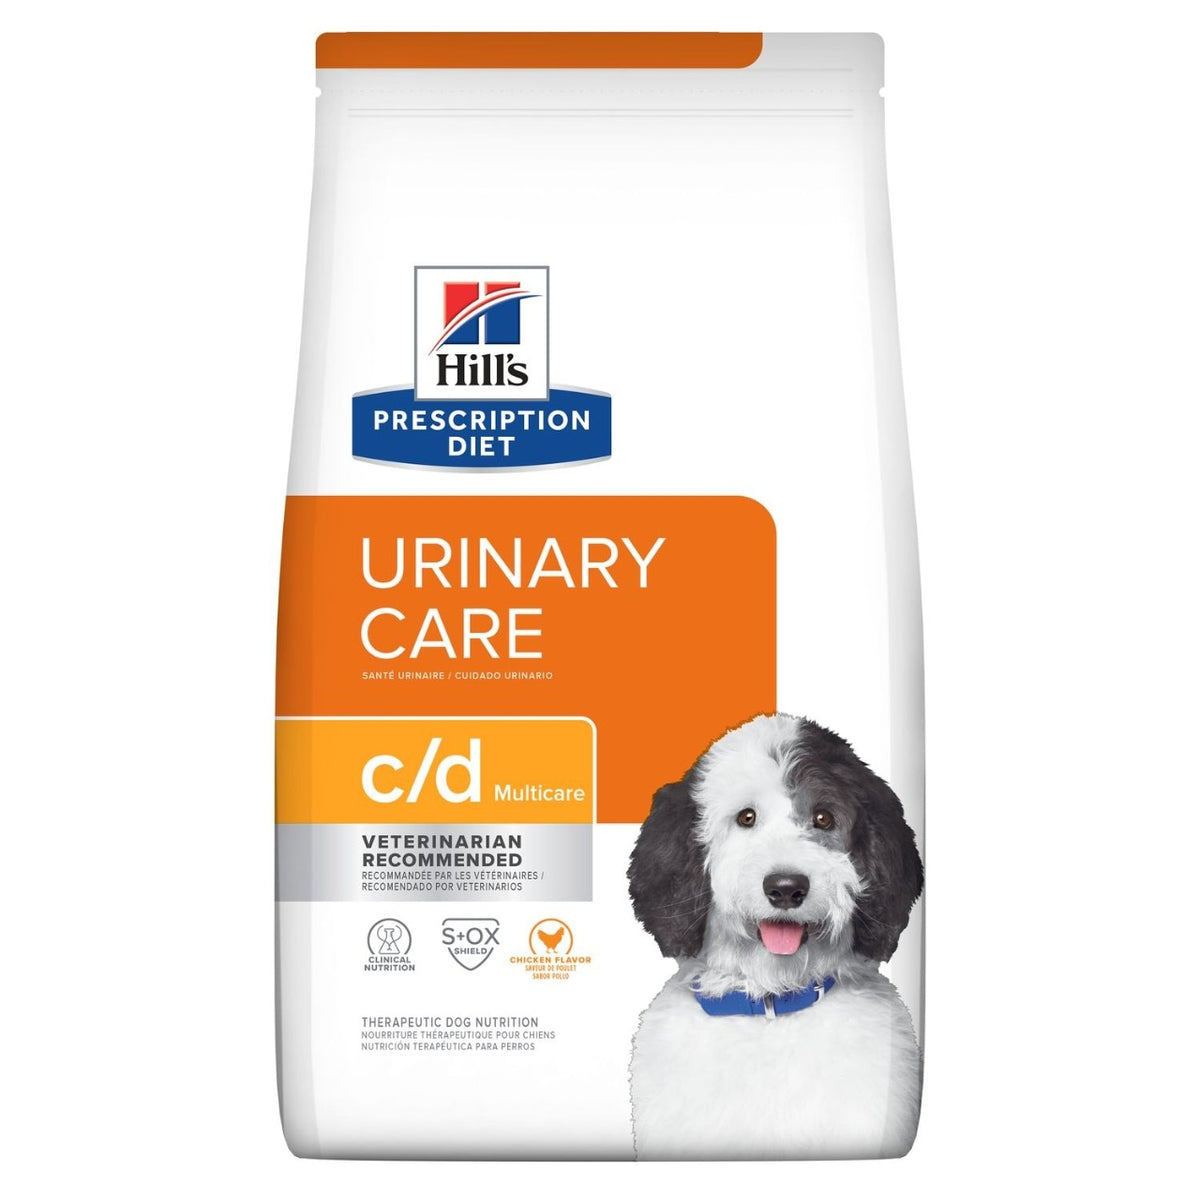 Hills Prescription Diet c/d Multicare Urinary Care Dog